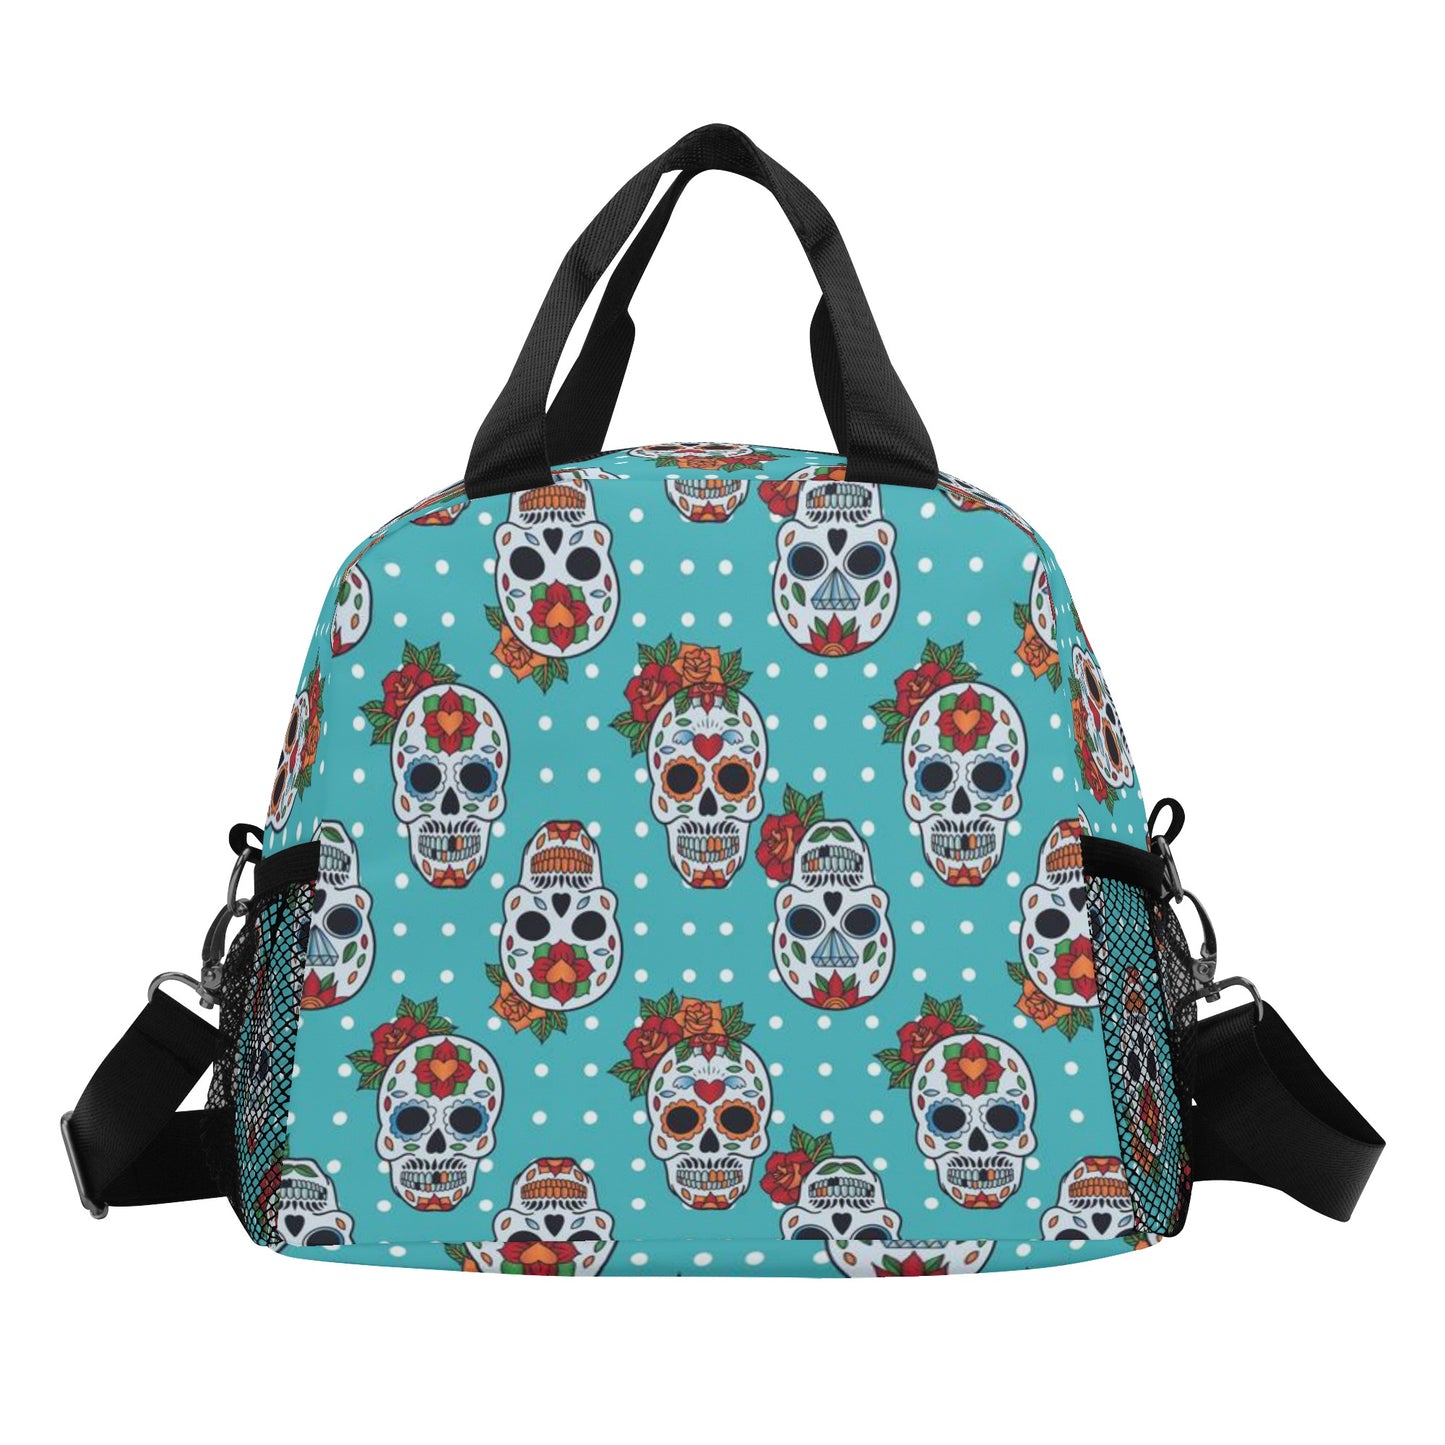 All Rose sugar skull pattern Over Printing Lunch Bag